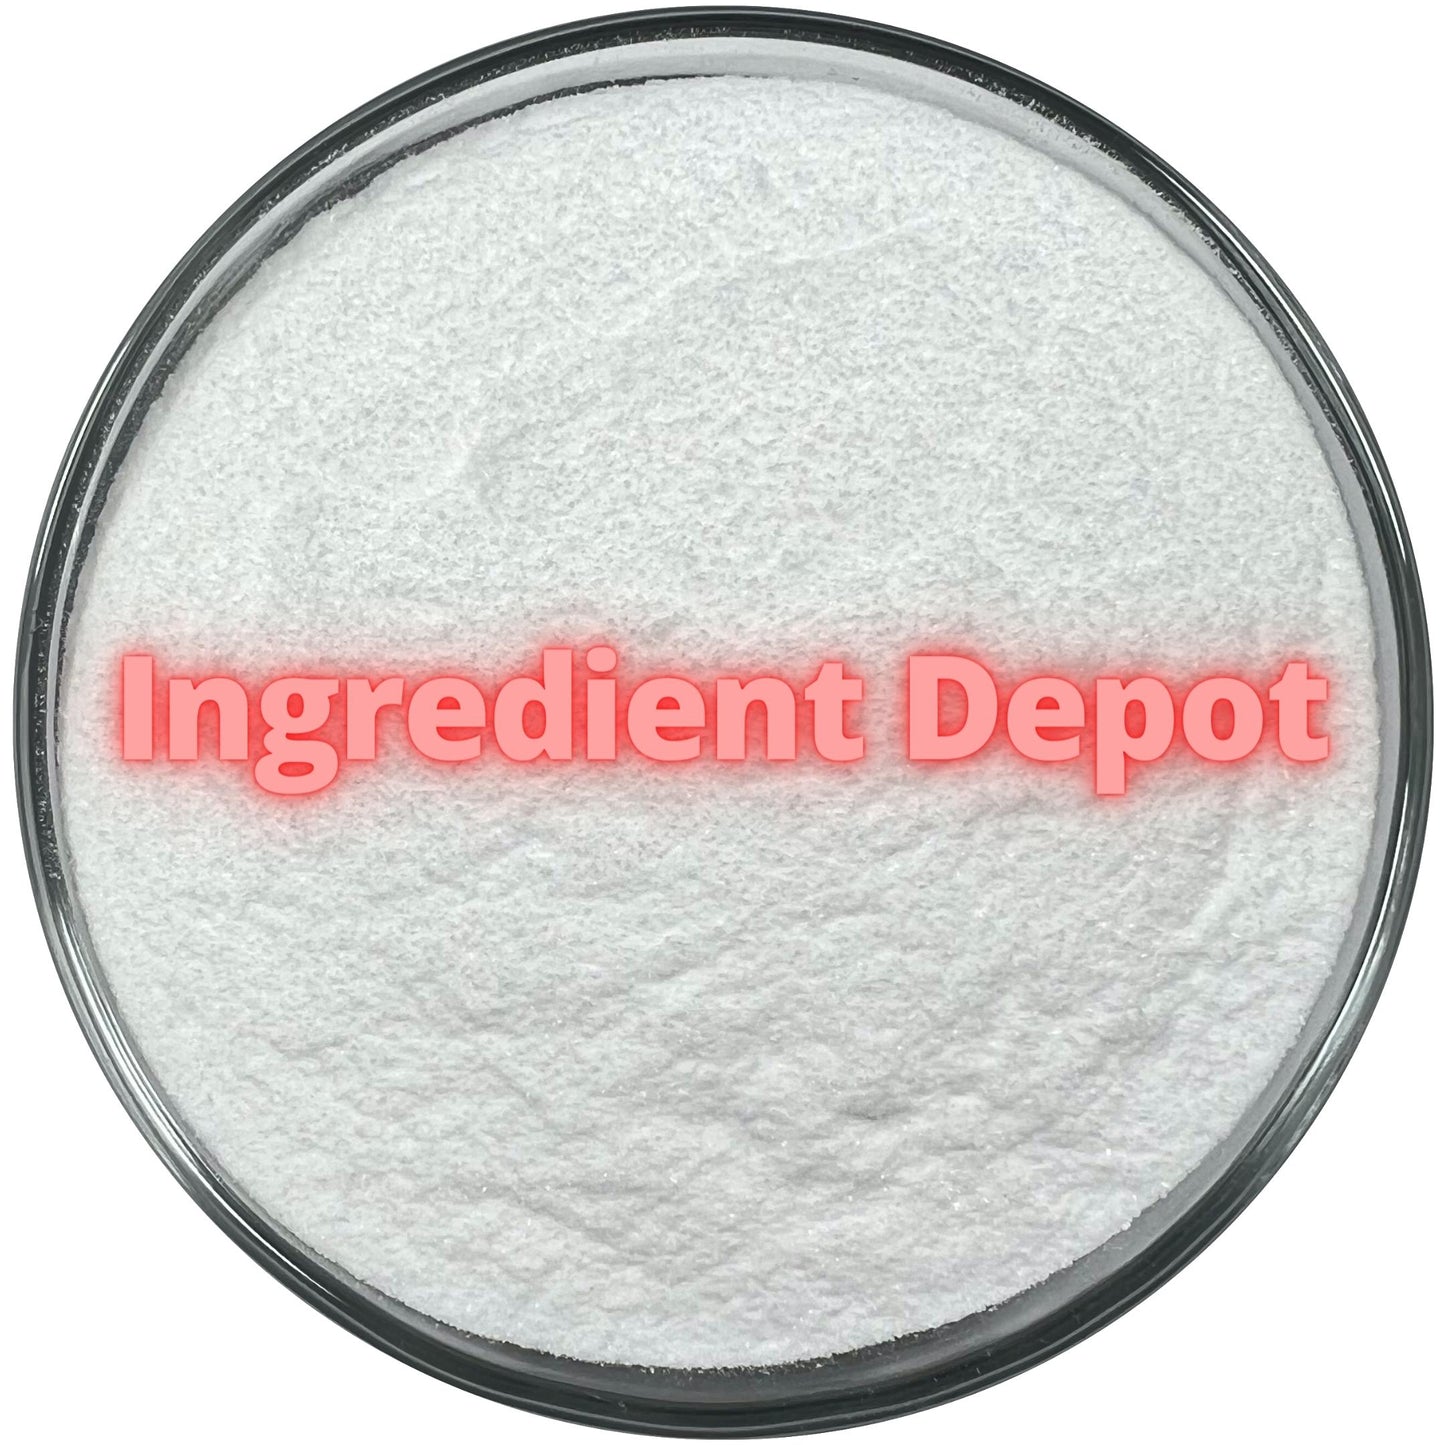 Dextrose Monohydrate, Food Grade 3 kgs - IngredientDepot.com